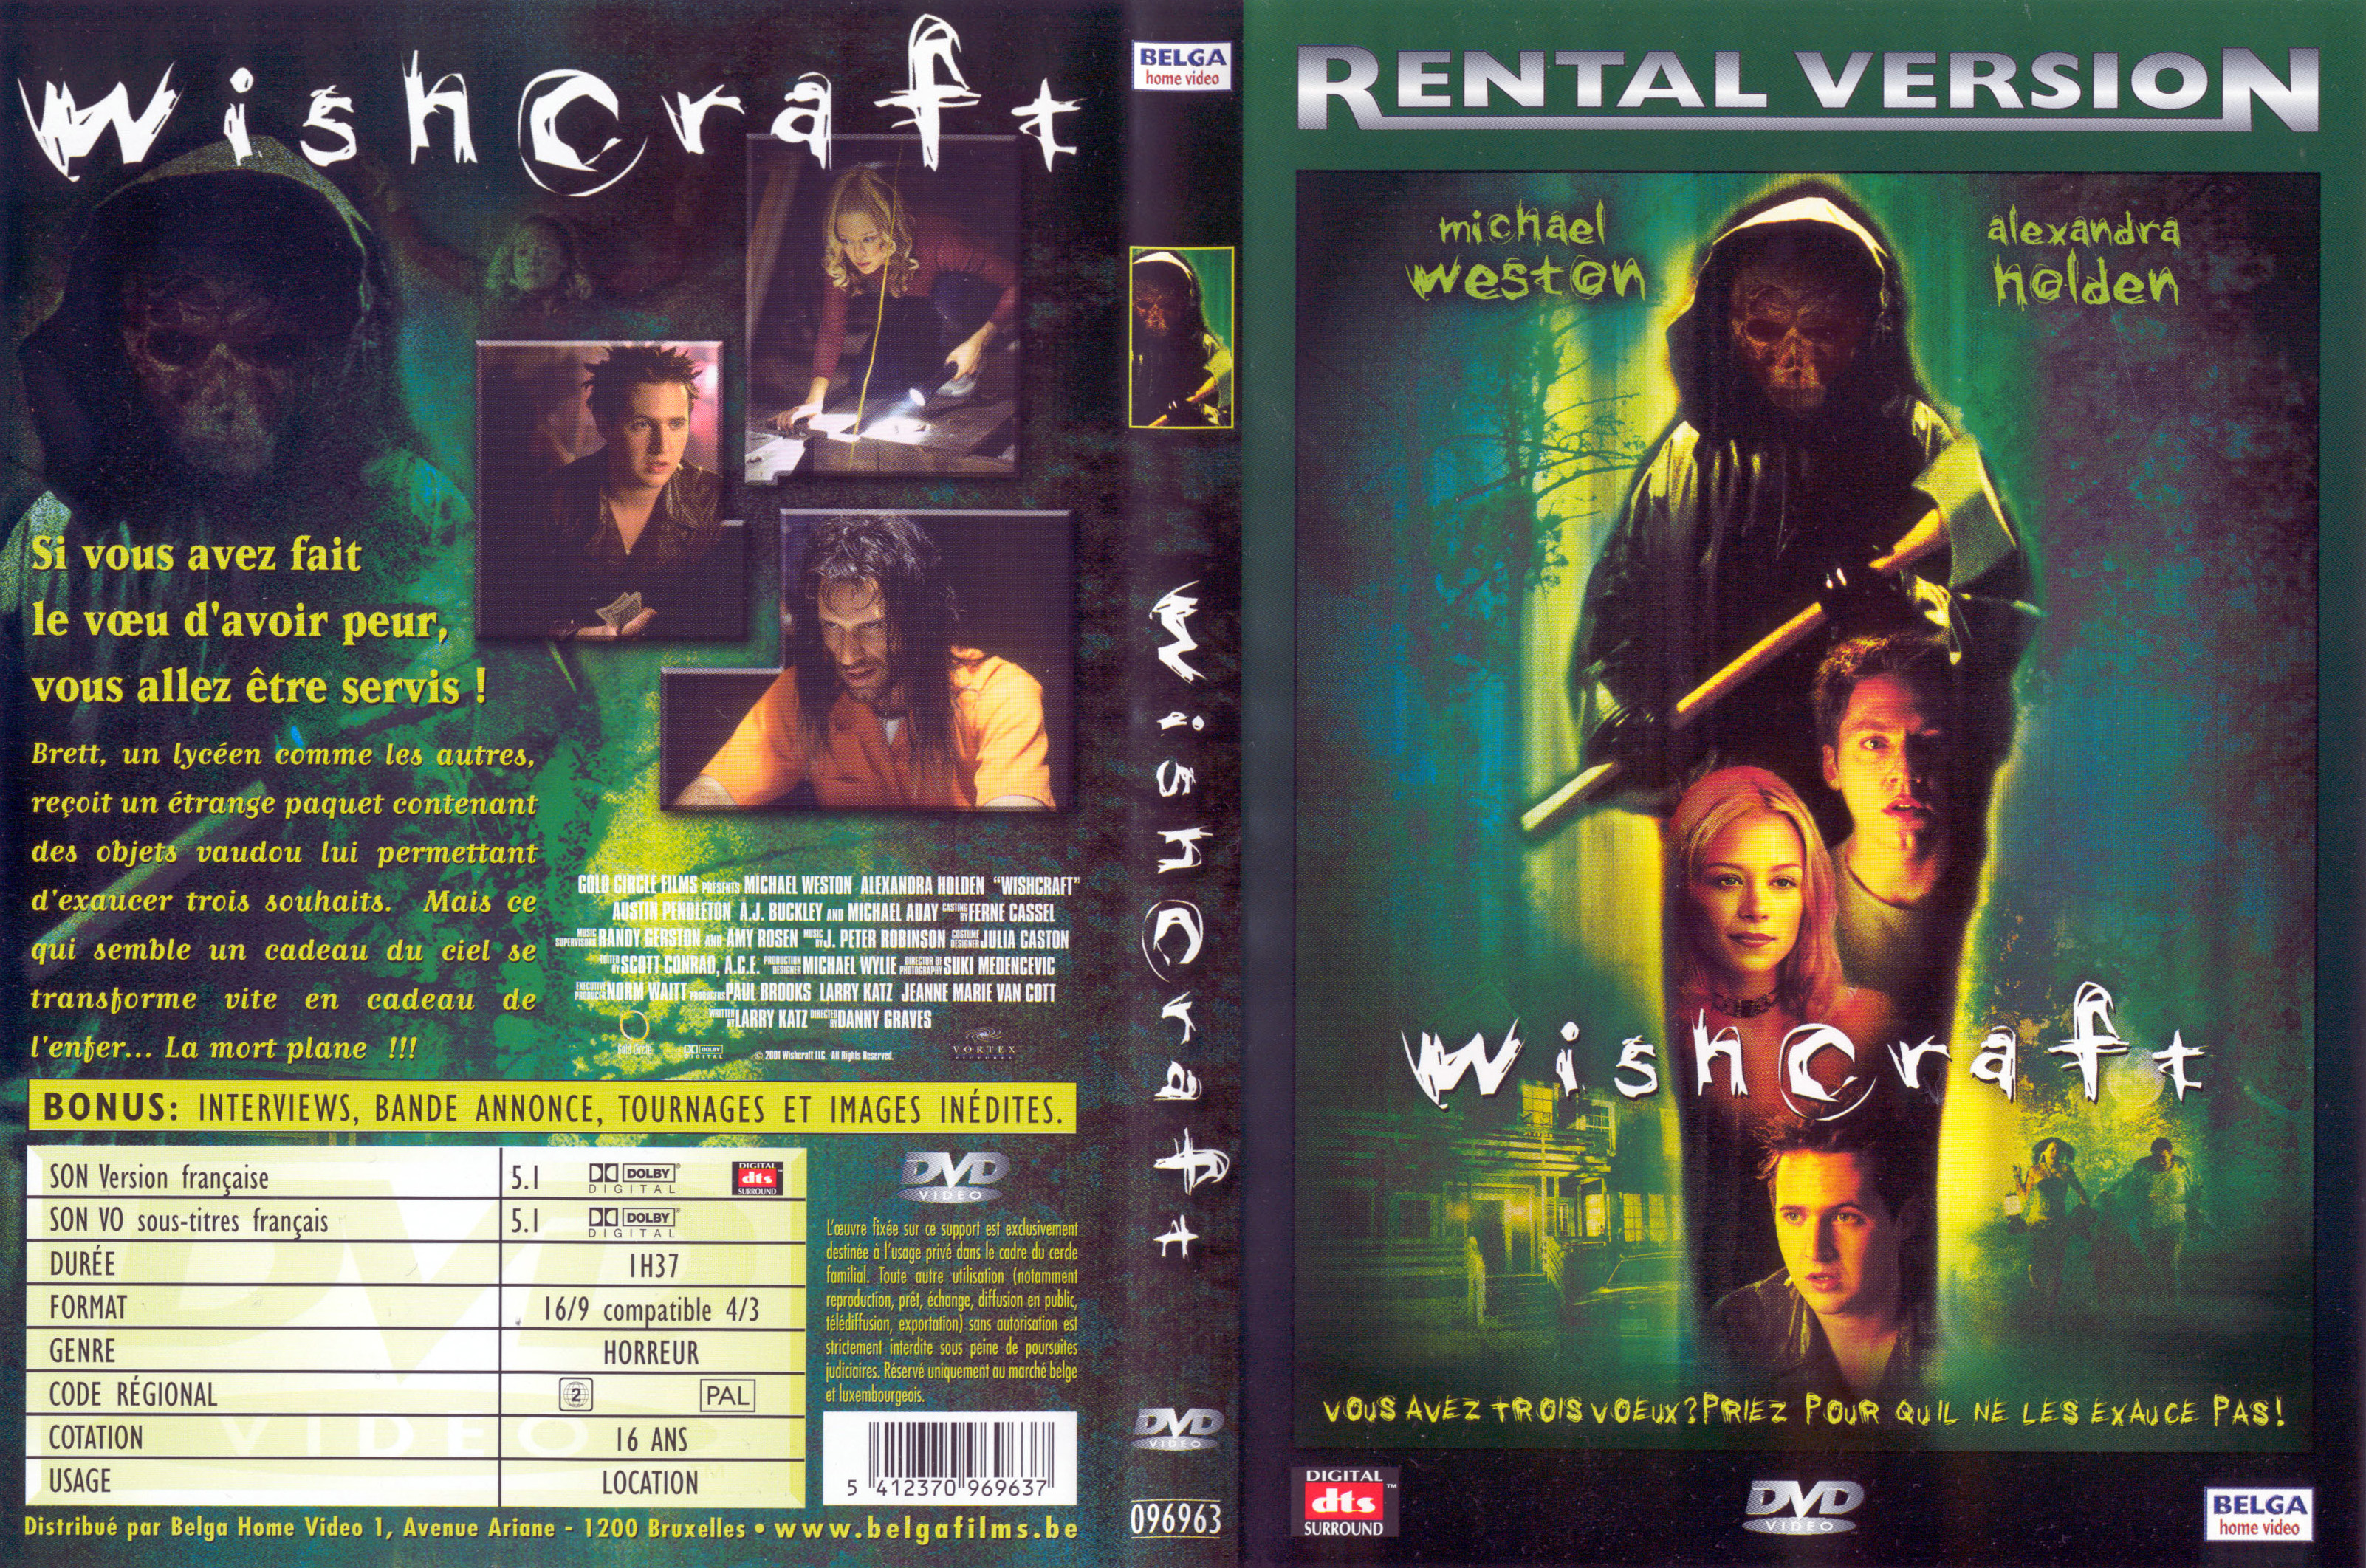 Jaquette DVD Wishcraft v2